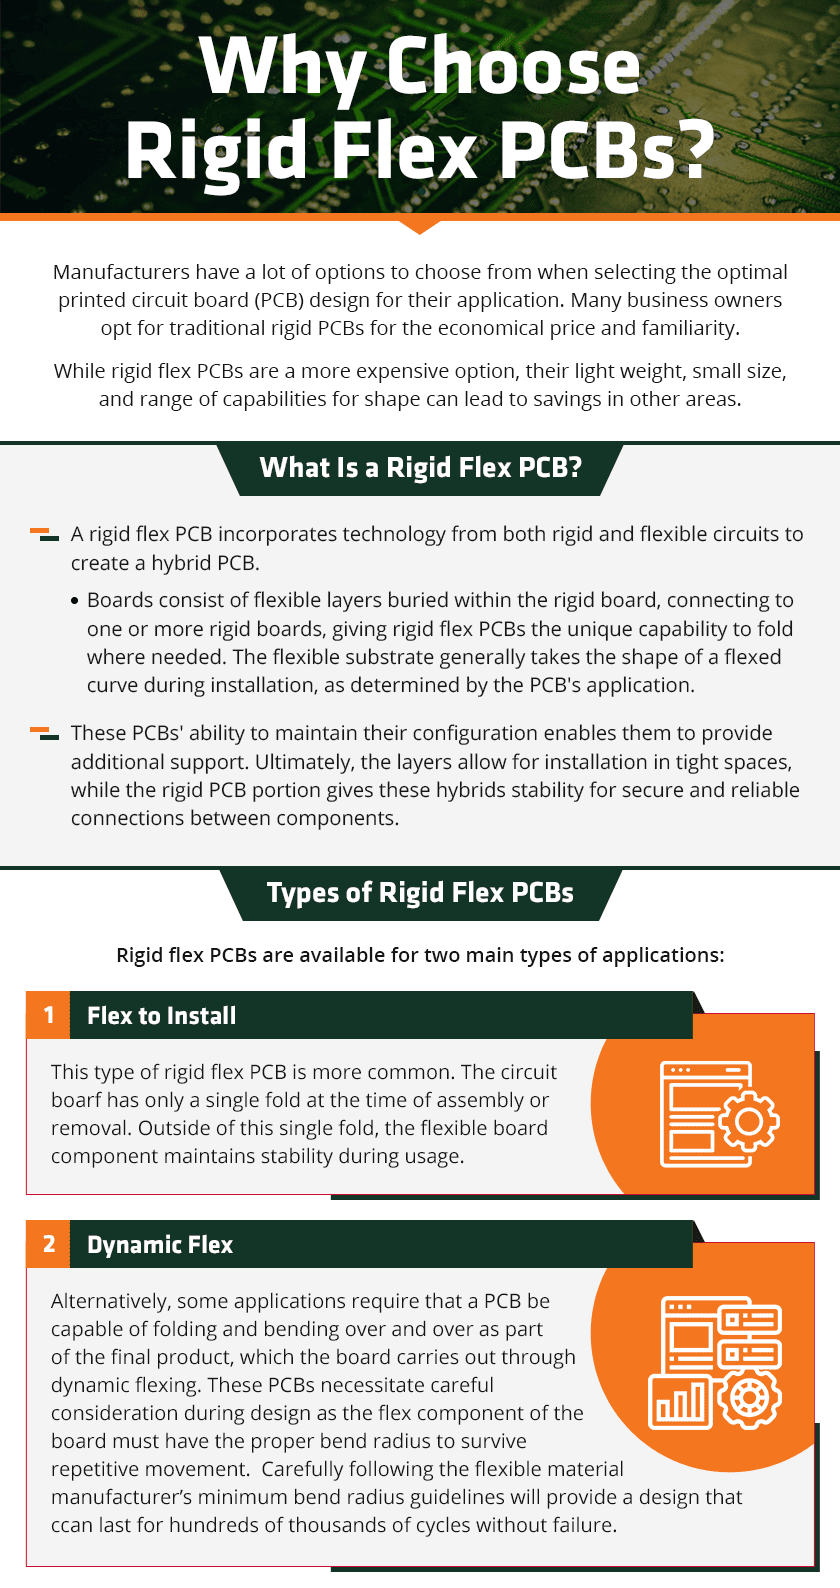 Why Choose Rigid Flex PCBs?